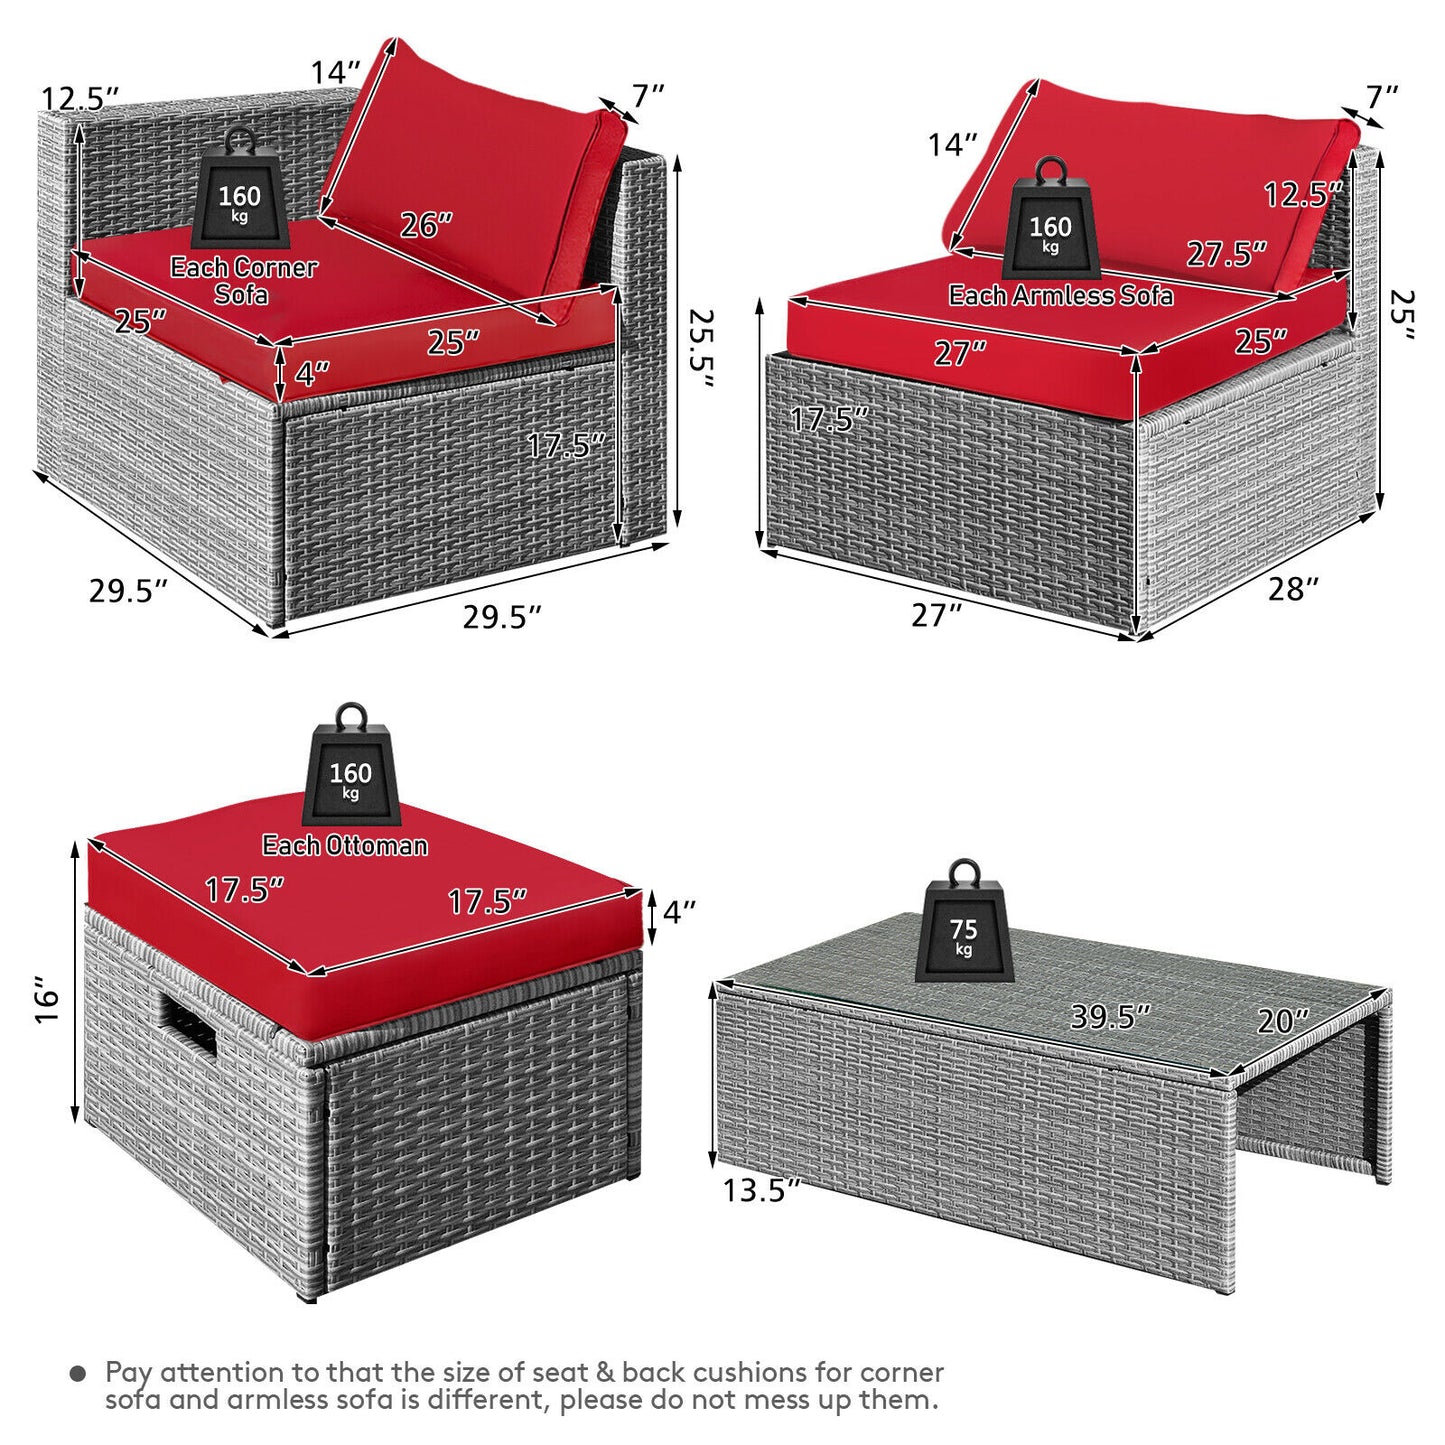 Patiojoy 8PCS Patio Rattan Furniture Set Storage Waterproof Cover Red Cushion